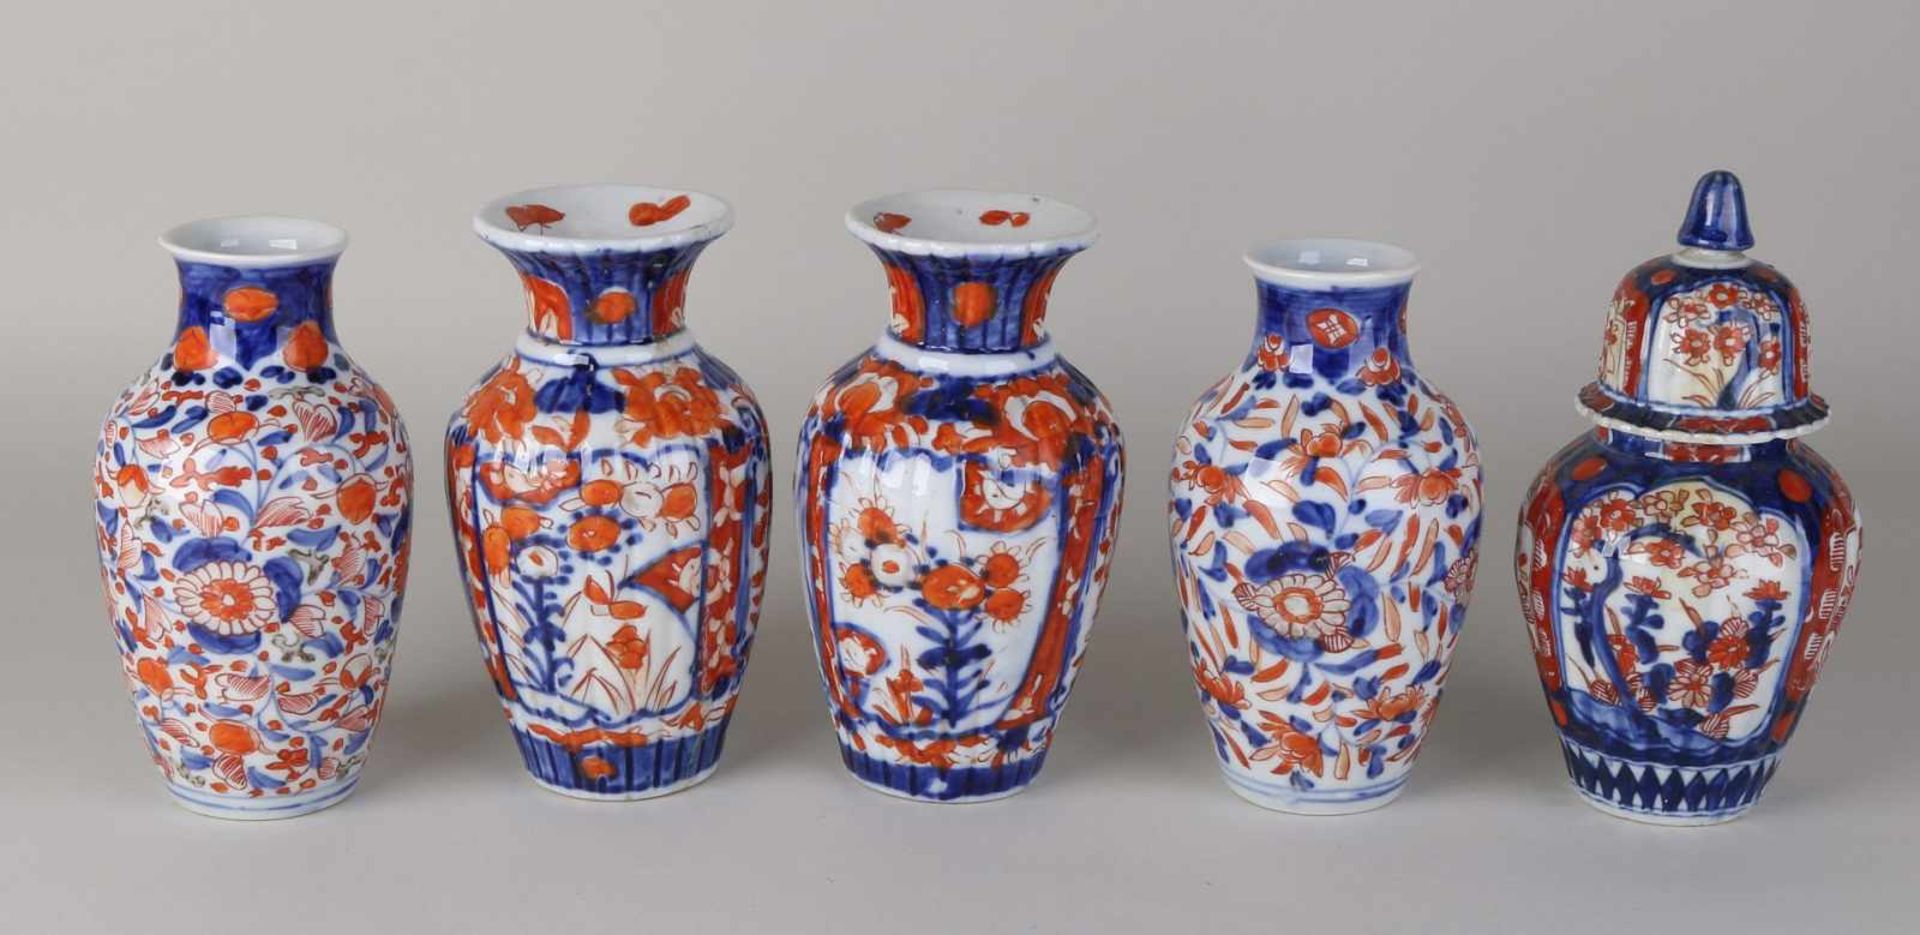 Five antique Imari porcelain vases. Two times set + one time loose vase. One chip bottom cover.